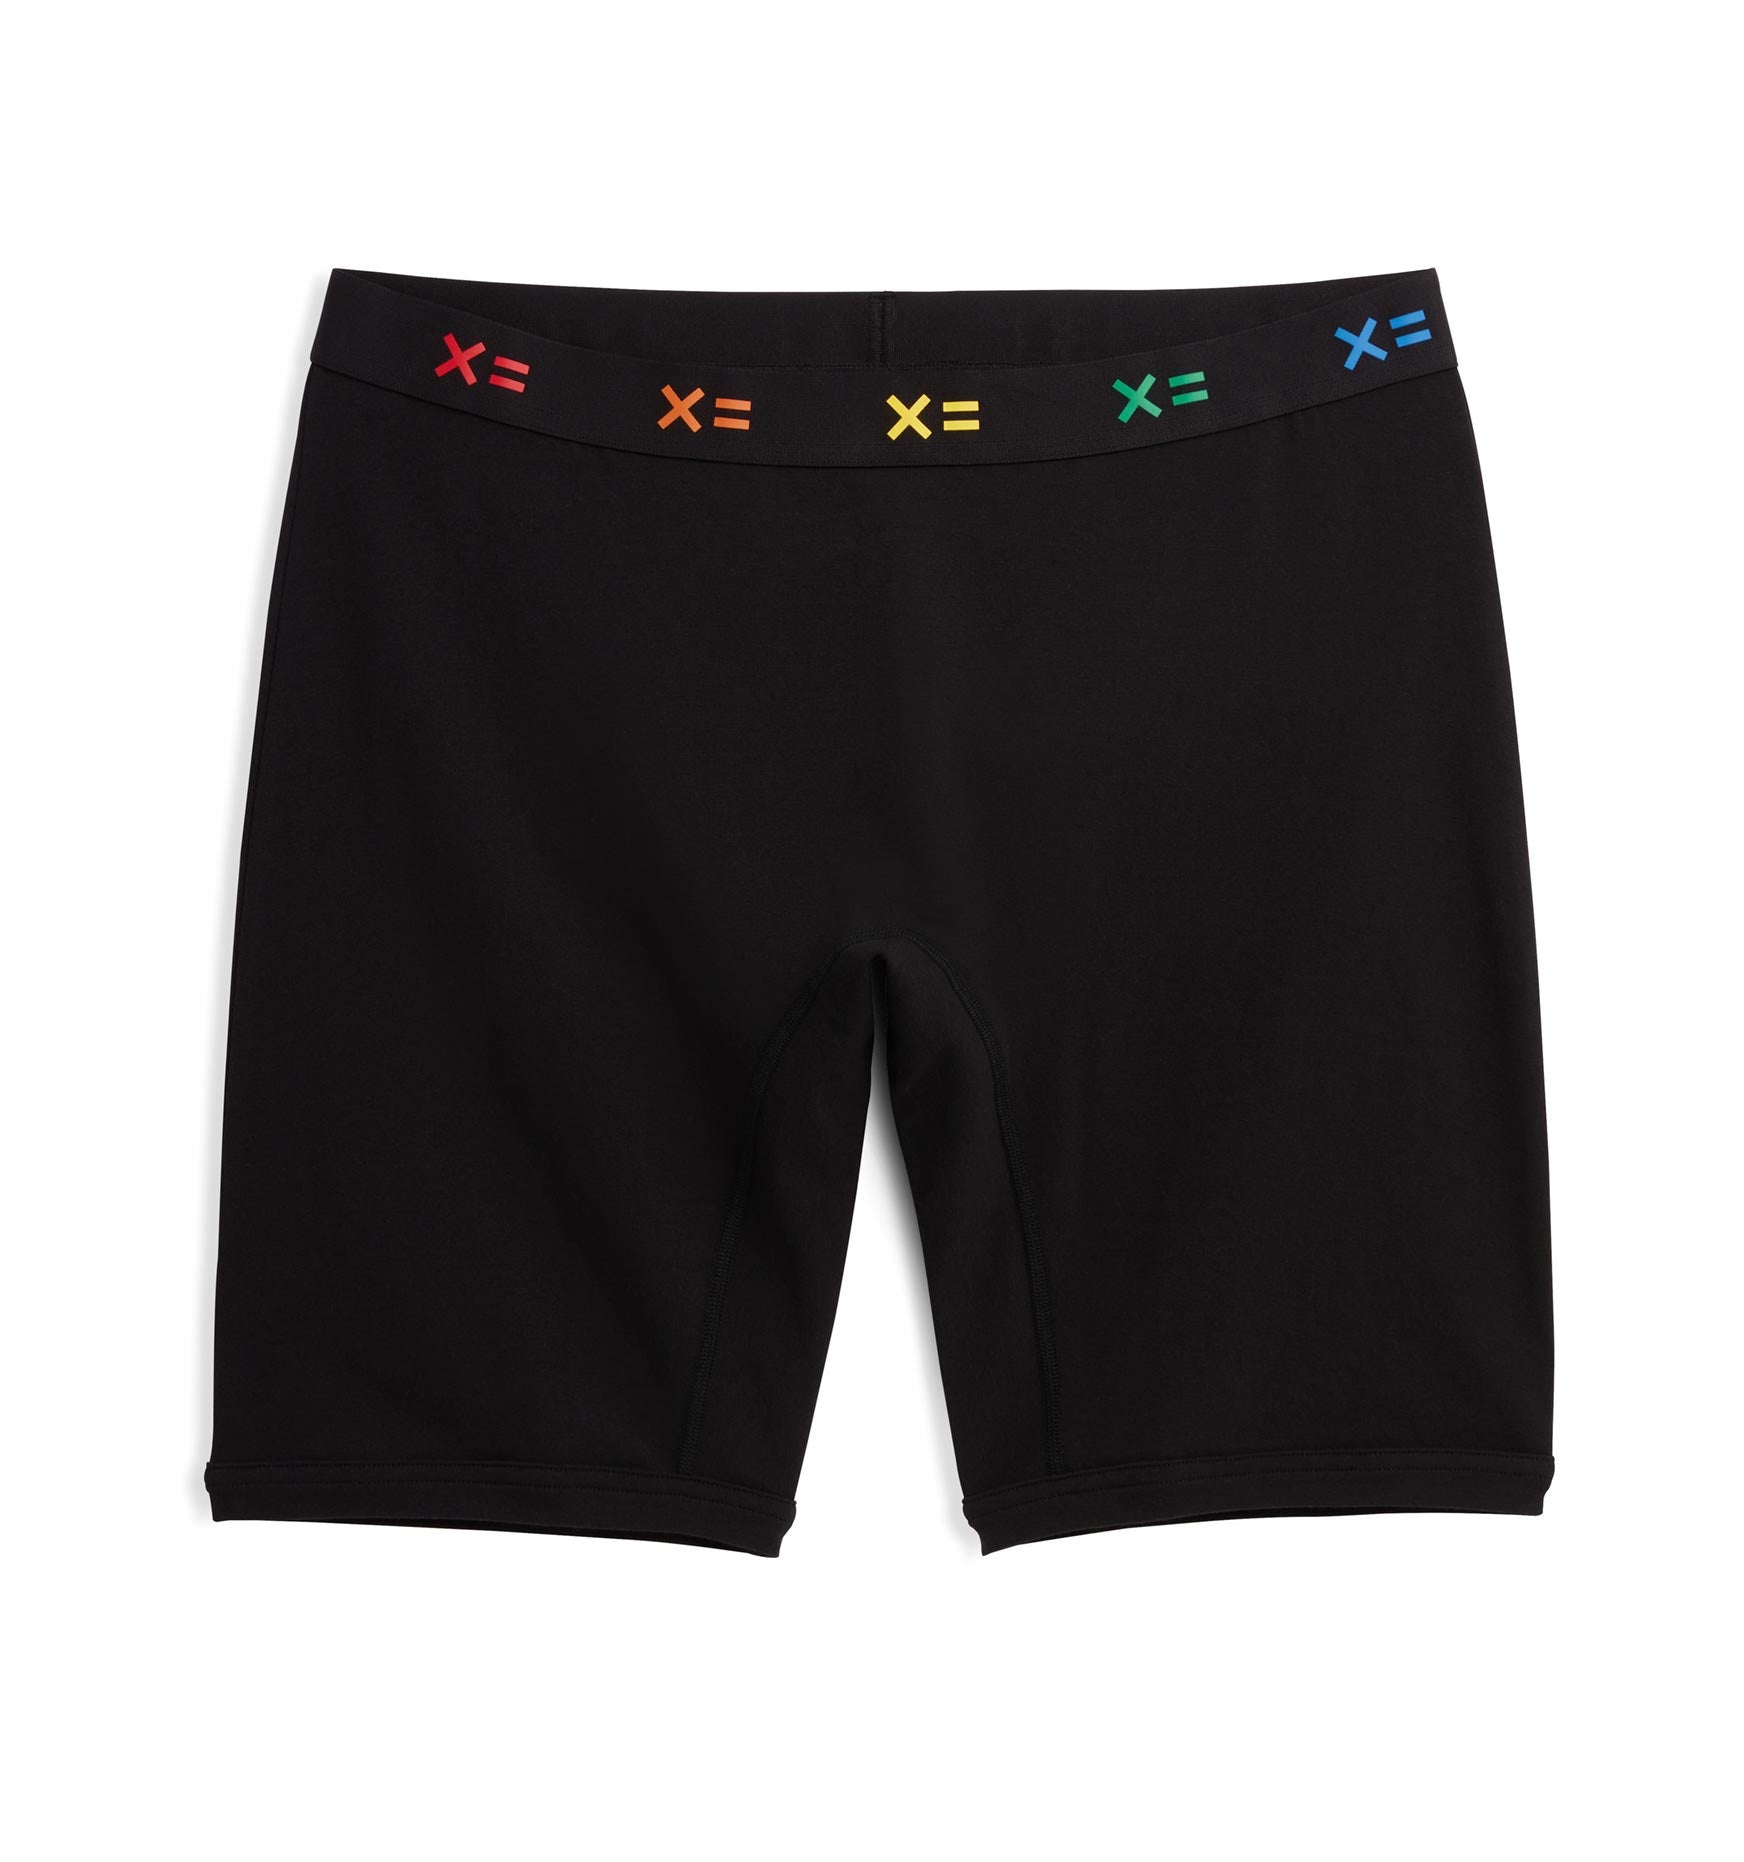 9" Boxer Briefs - Black X= Rainbow